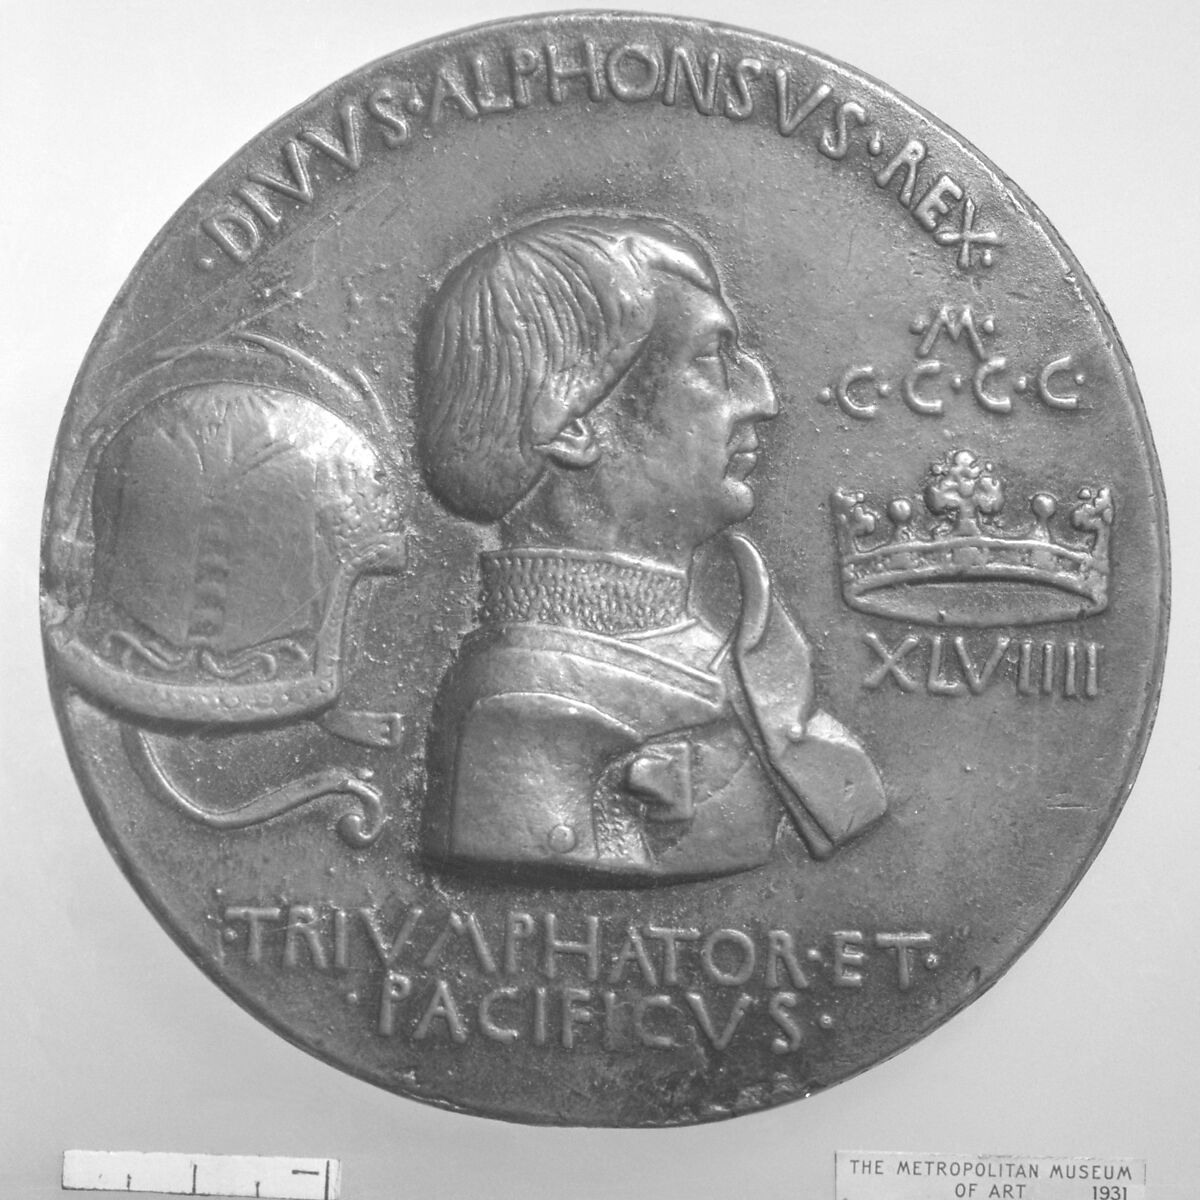 Alfonso V, King of Aragon and Sicily, Medalist: Pisanello (Antonio Pisano) (Italian, Pisa or Verona by 1395–1455), Bronze, Italian 